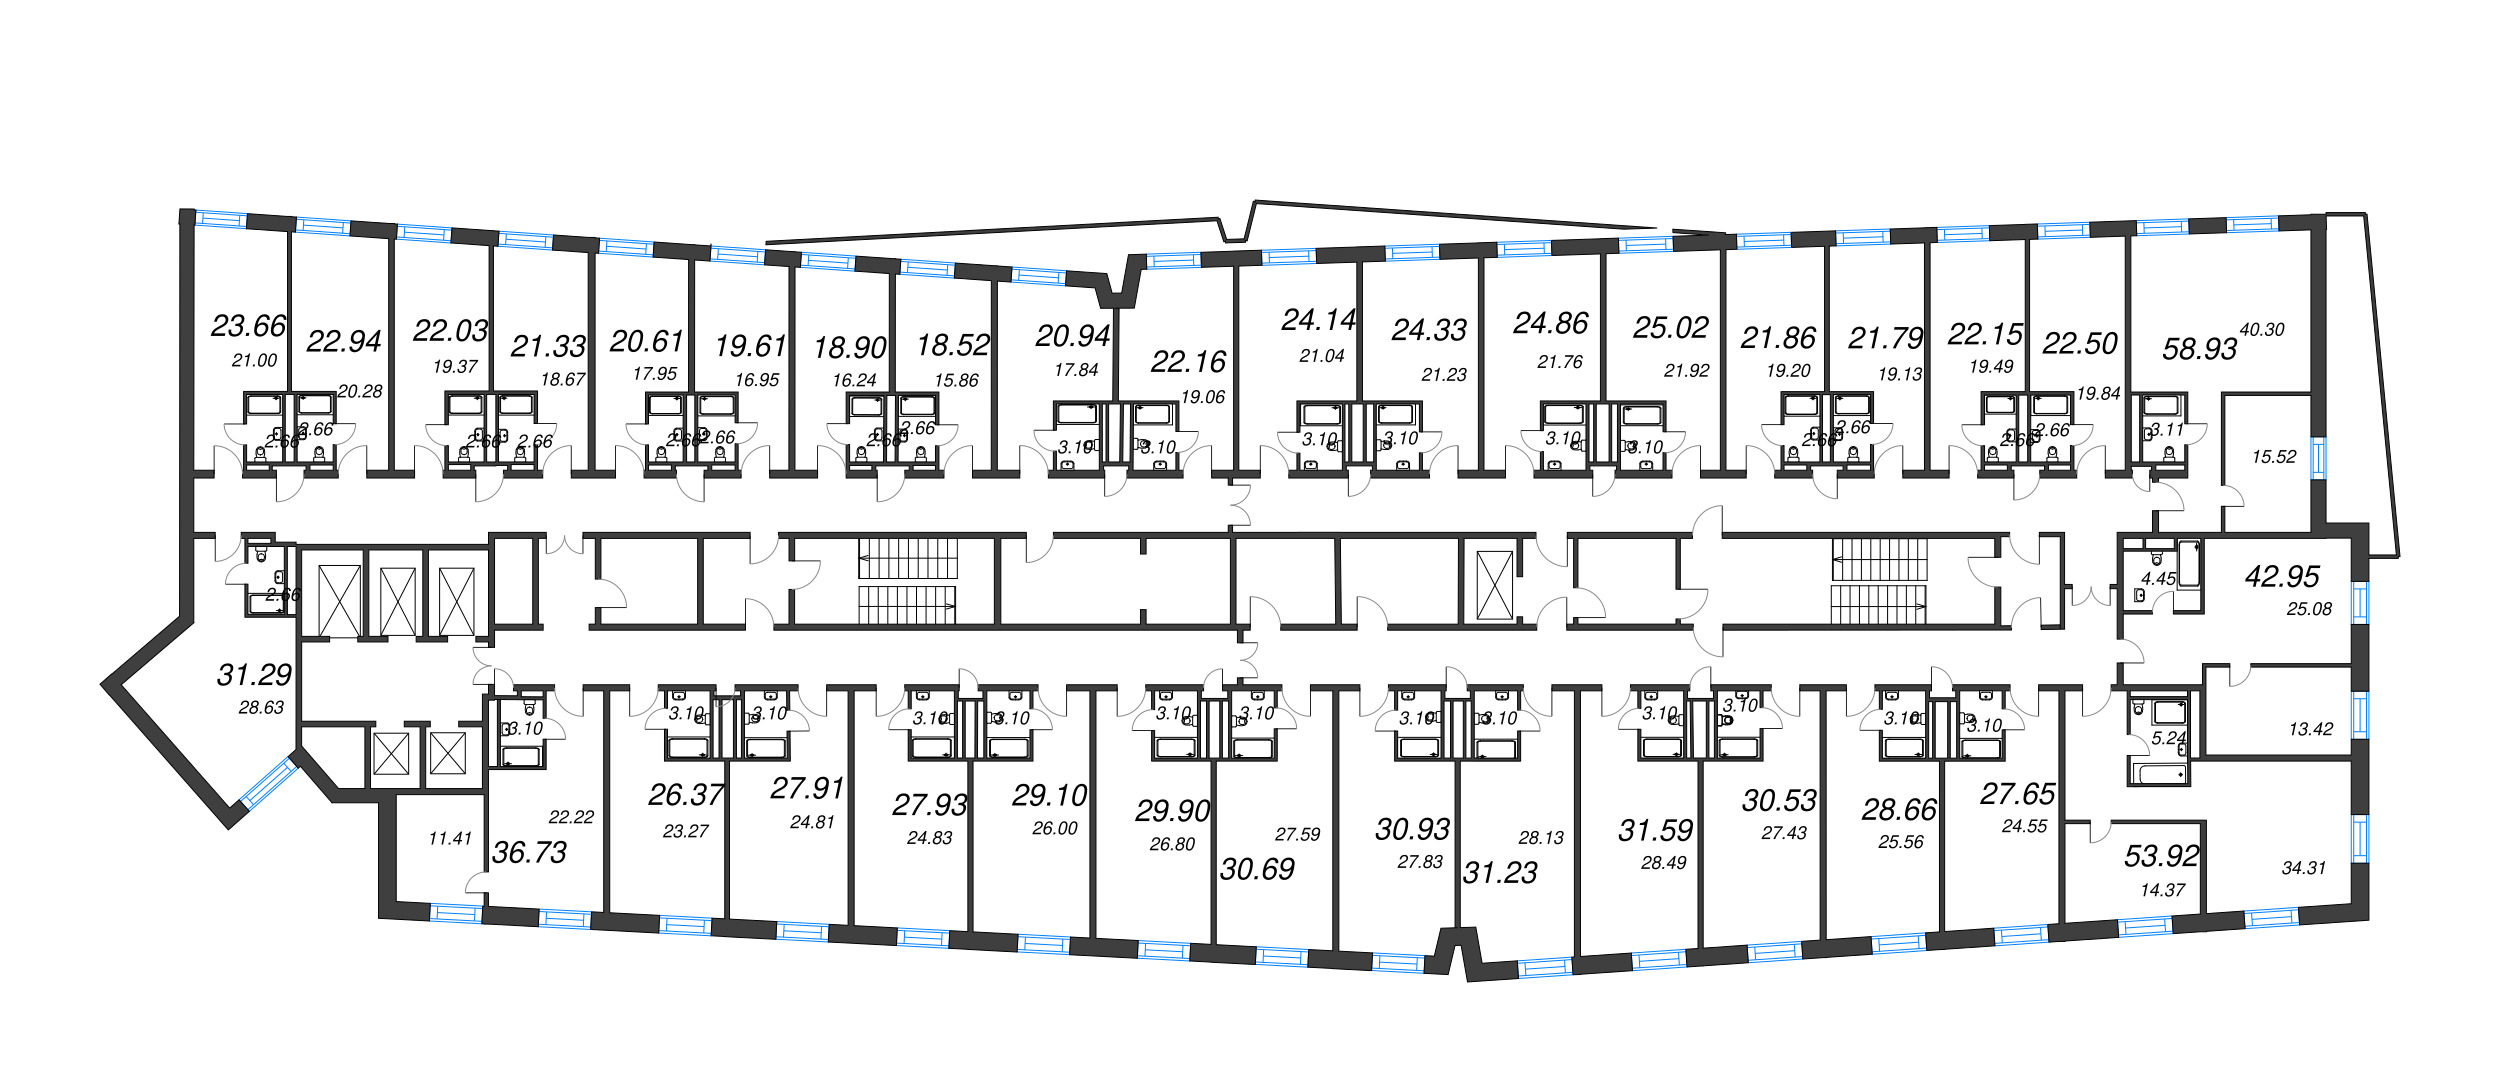 2-комнатная (Евро) квартира, 36.73 м² - планировка этажа